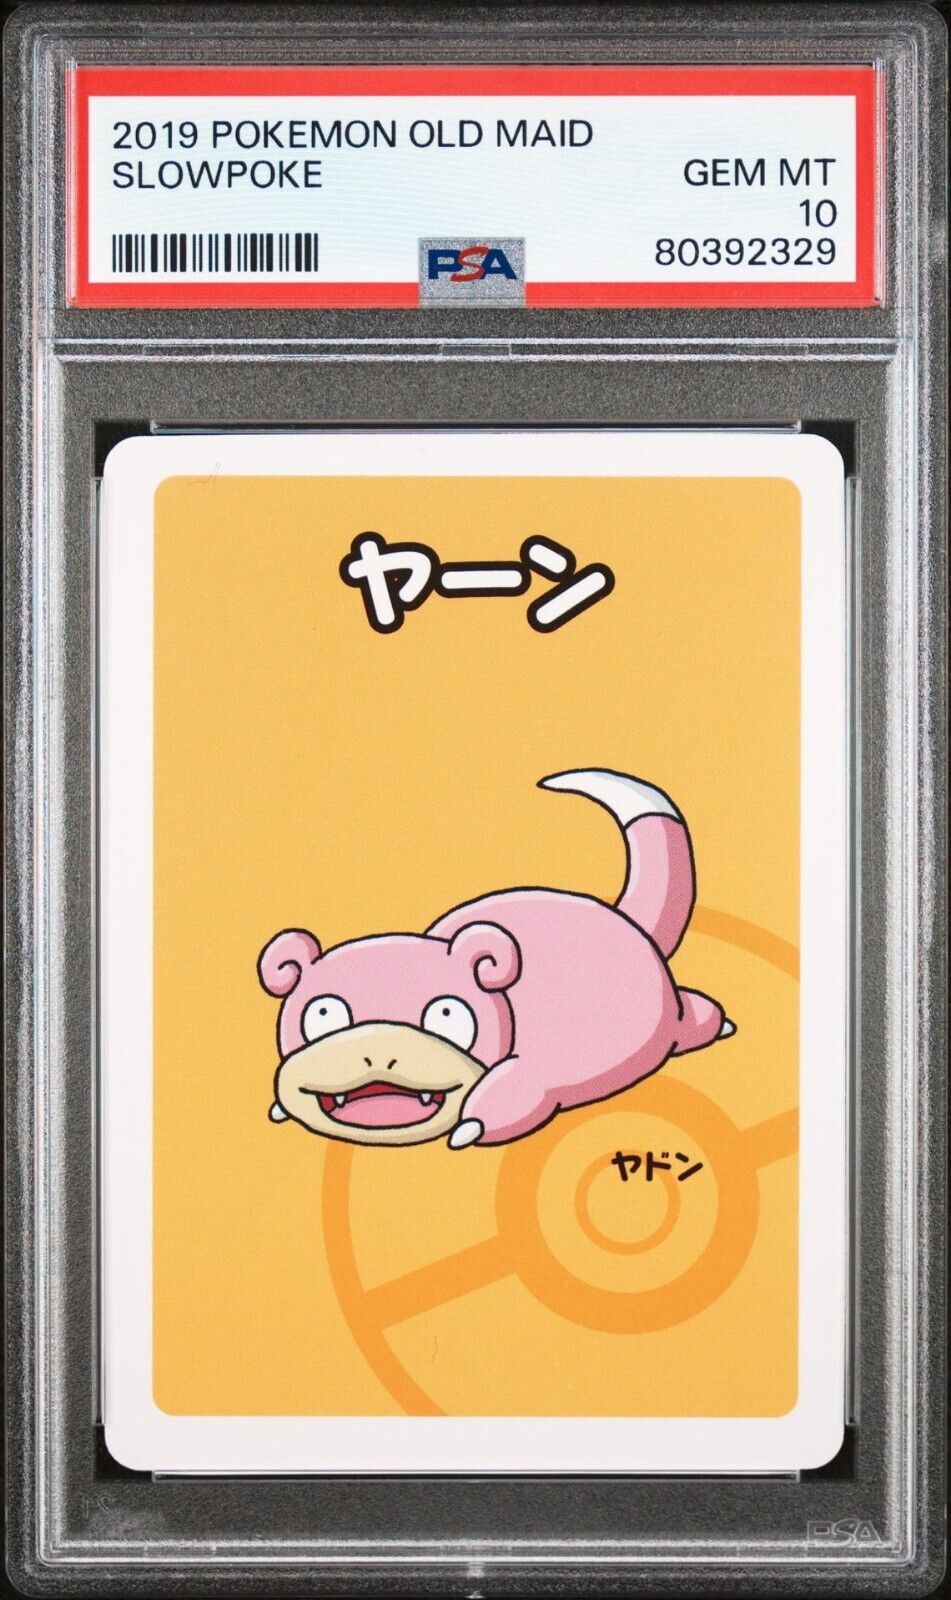 PSA 10 GEM MINT Japanese Slowpoke Old Maid Babanuki Card Pokémon Center 2019